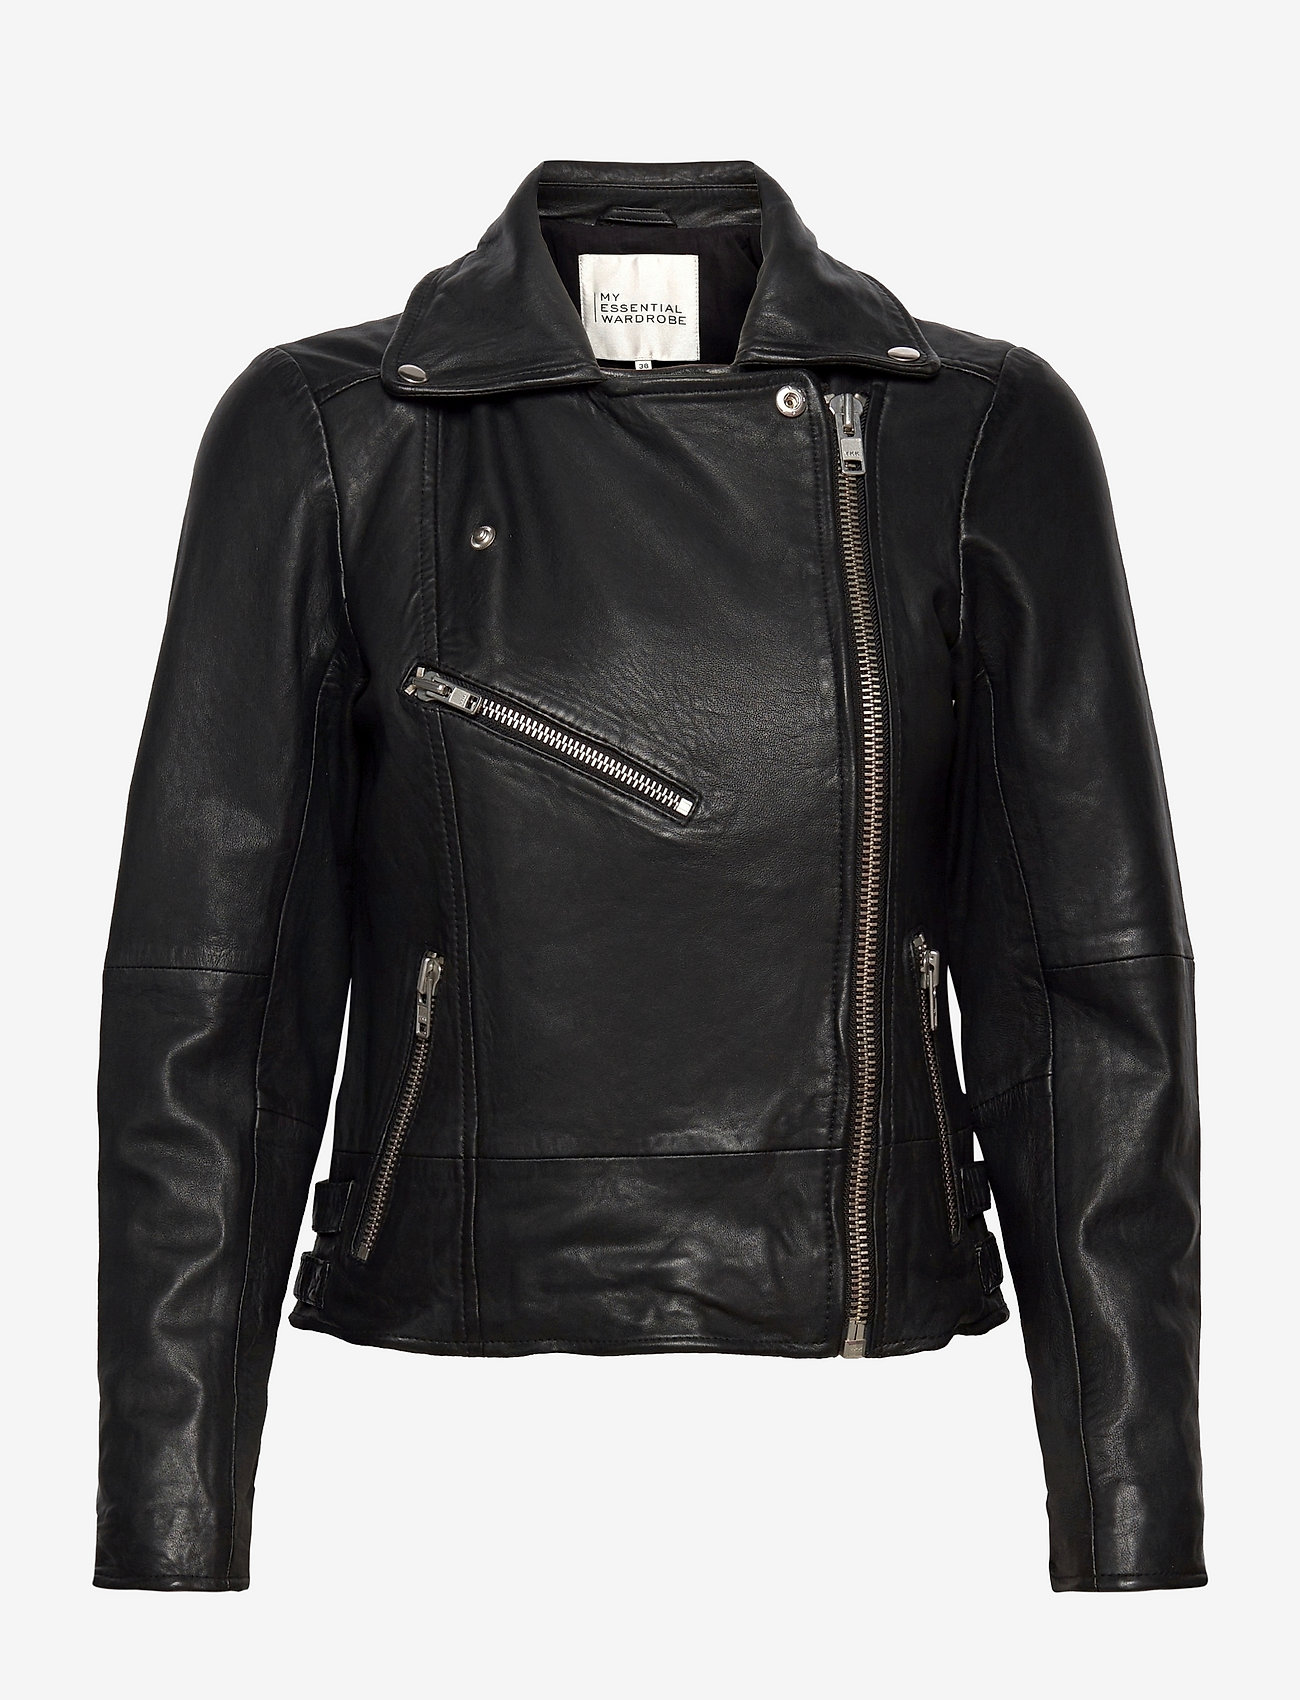 My Essential Wardrobe 02 The Leather Jacket - Jackets & Coats | Boozt.com